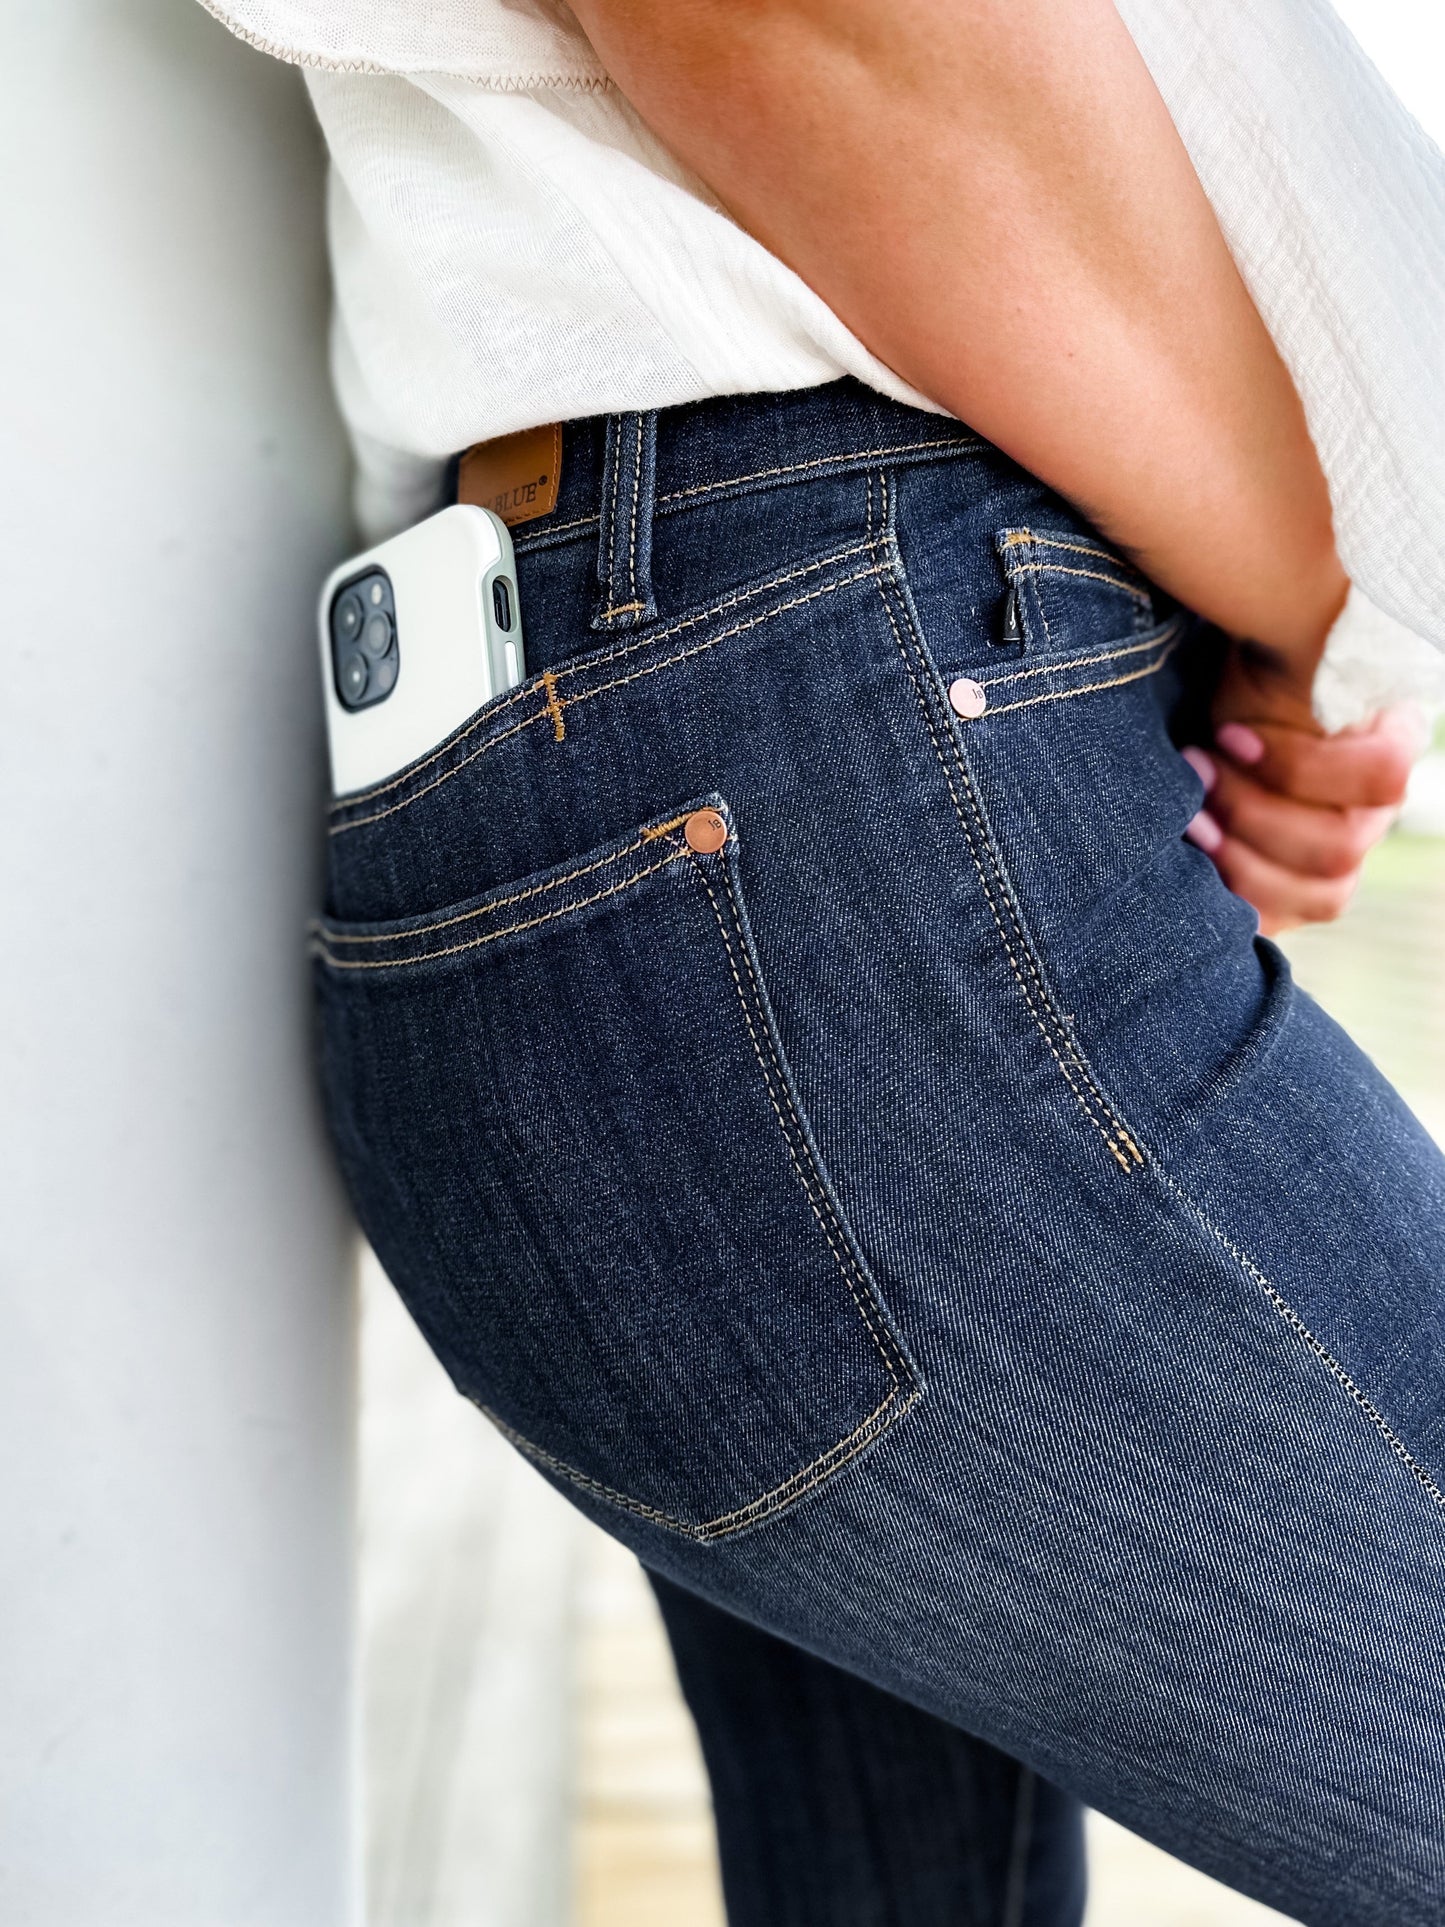 Judy Blue Holla Back Girl Cell Phone Pocket Dark Wash Jeans